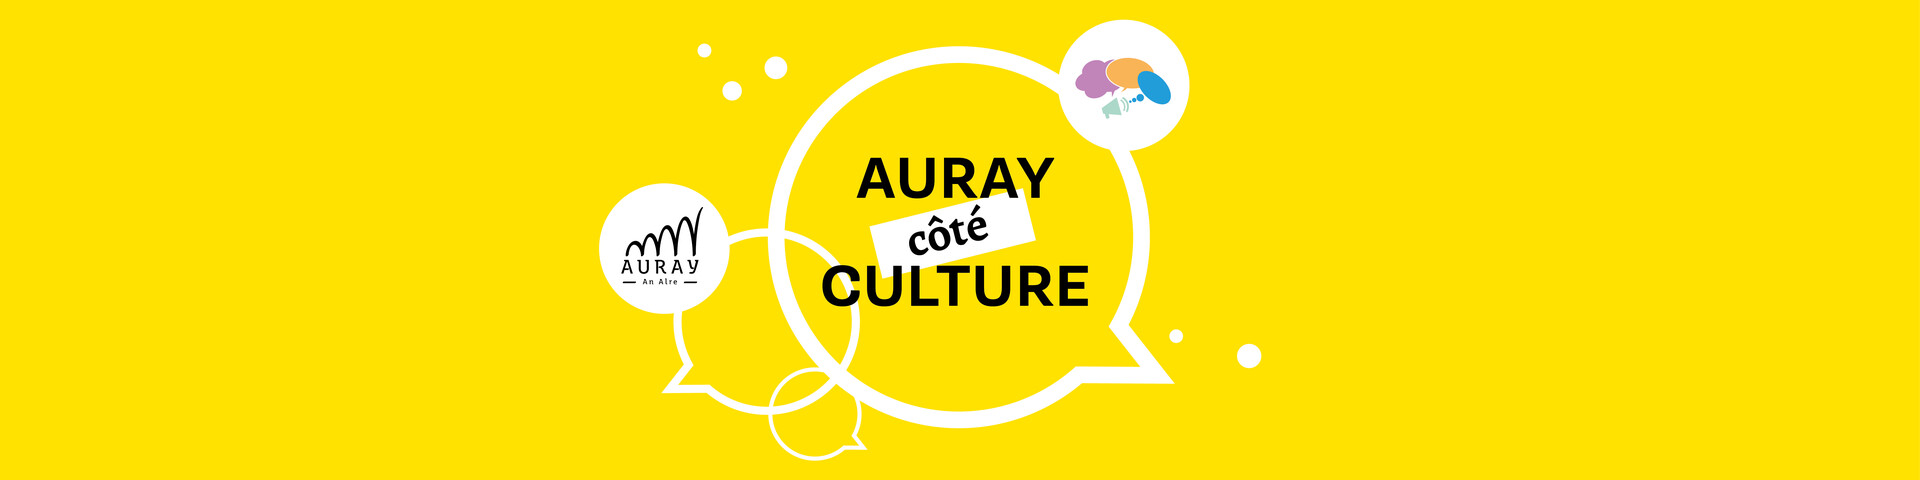 Bandeau_Auray côté culture